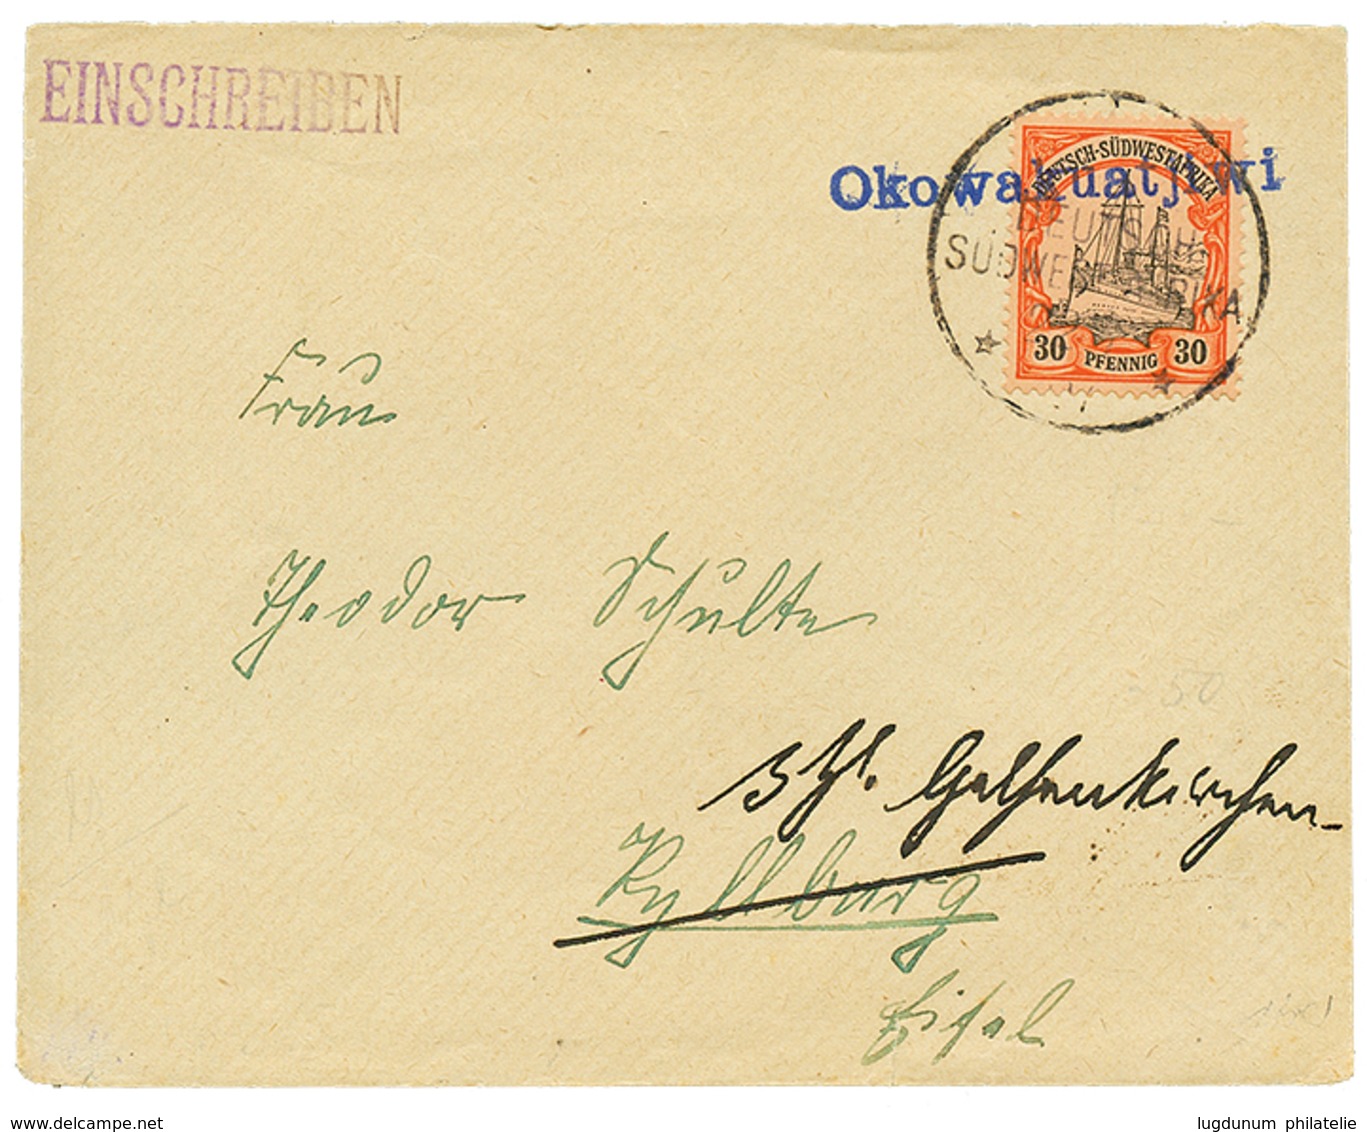 1081 30pf Canc. Blue OKOWAKUATJIWI On REGISTERED Envelope To GERMANY. Superb. - German South West Africa